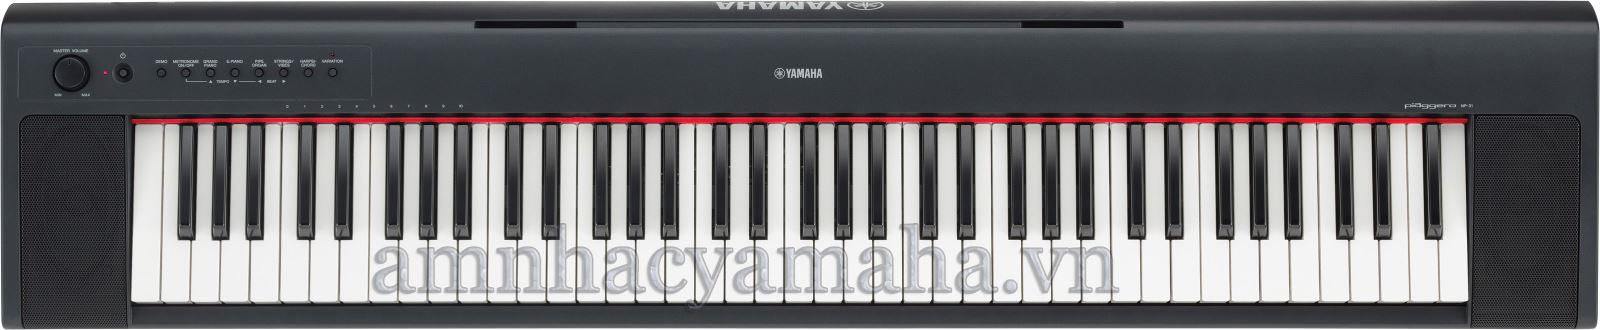 Portable keyboard Yamaha NP-31